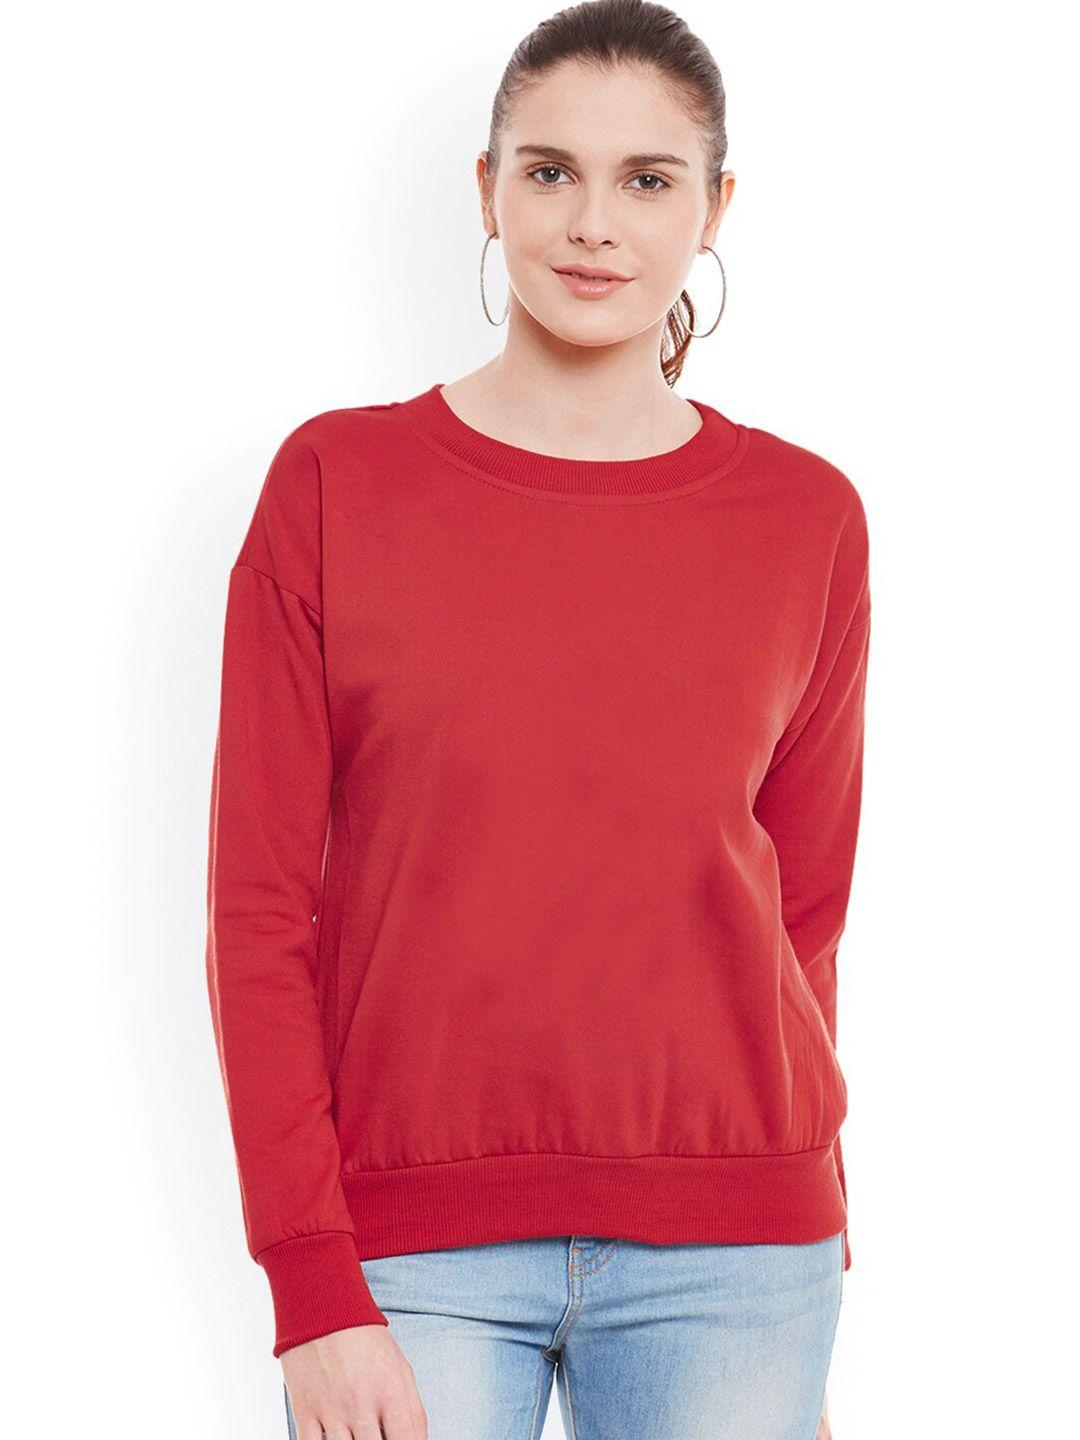 baesd women red sweatshirt